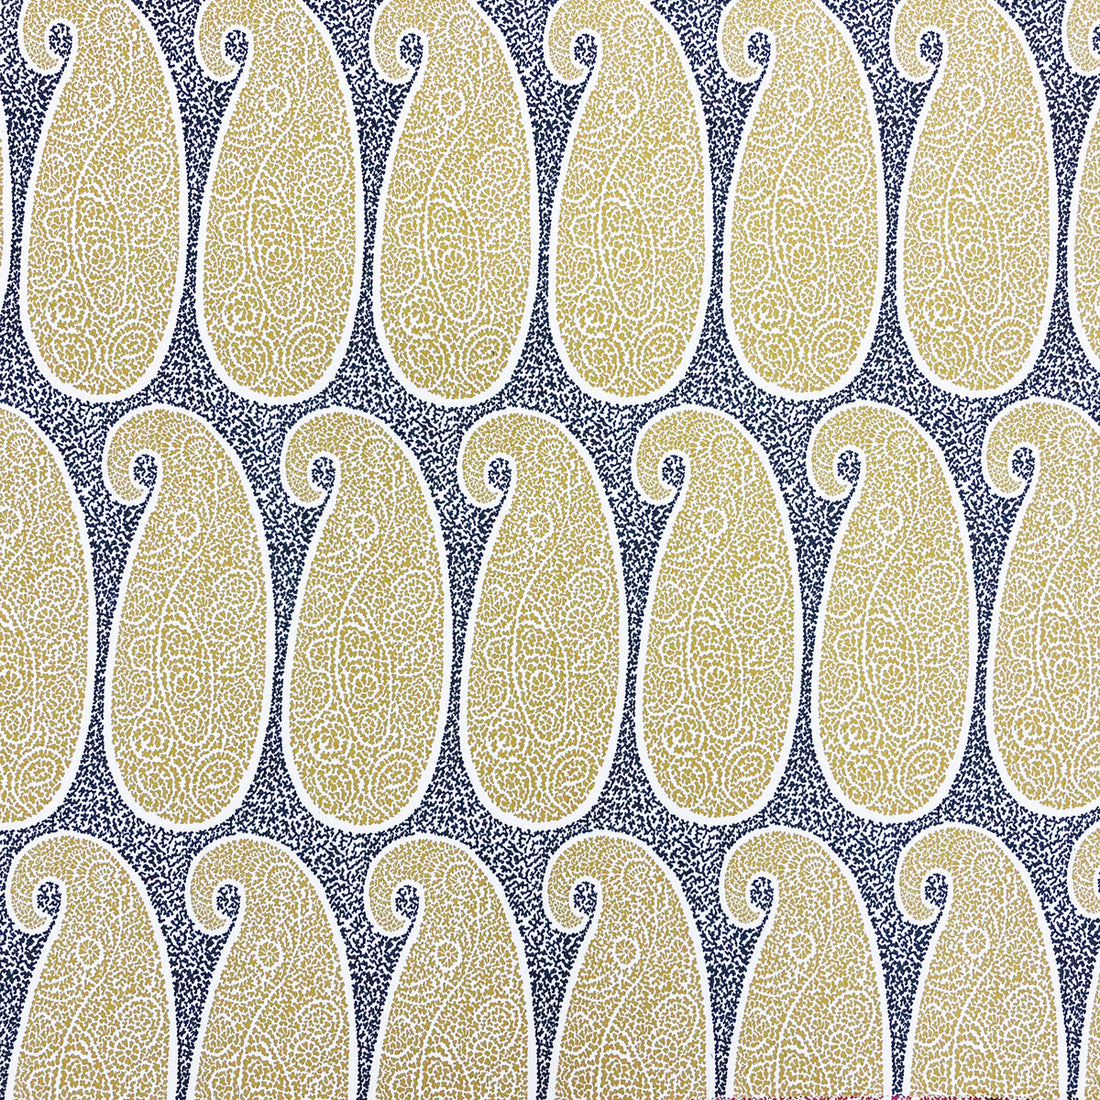 Yaiza fabric in antracita/ocre color - pattern LCT1023.003.0 - by Gaston y Daniela in the Lorenzo Castillo V collection